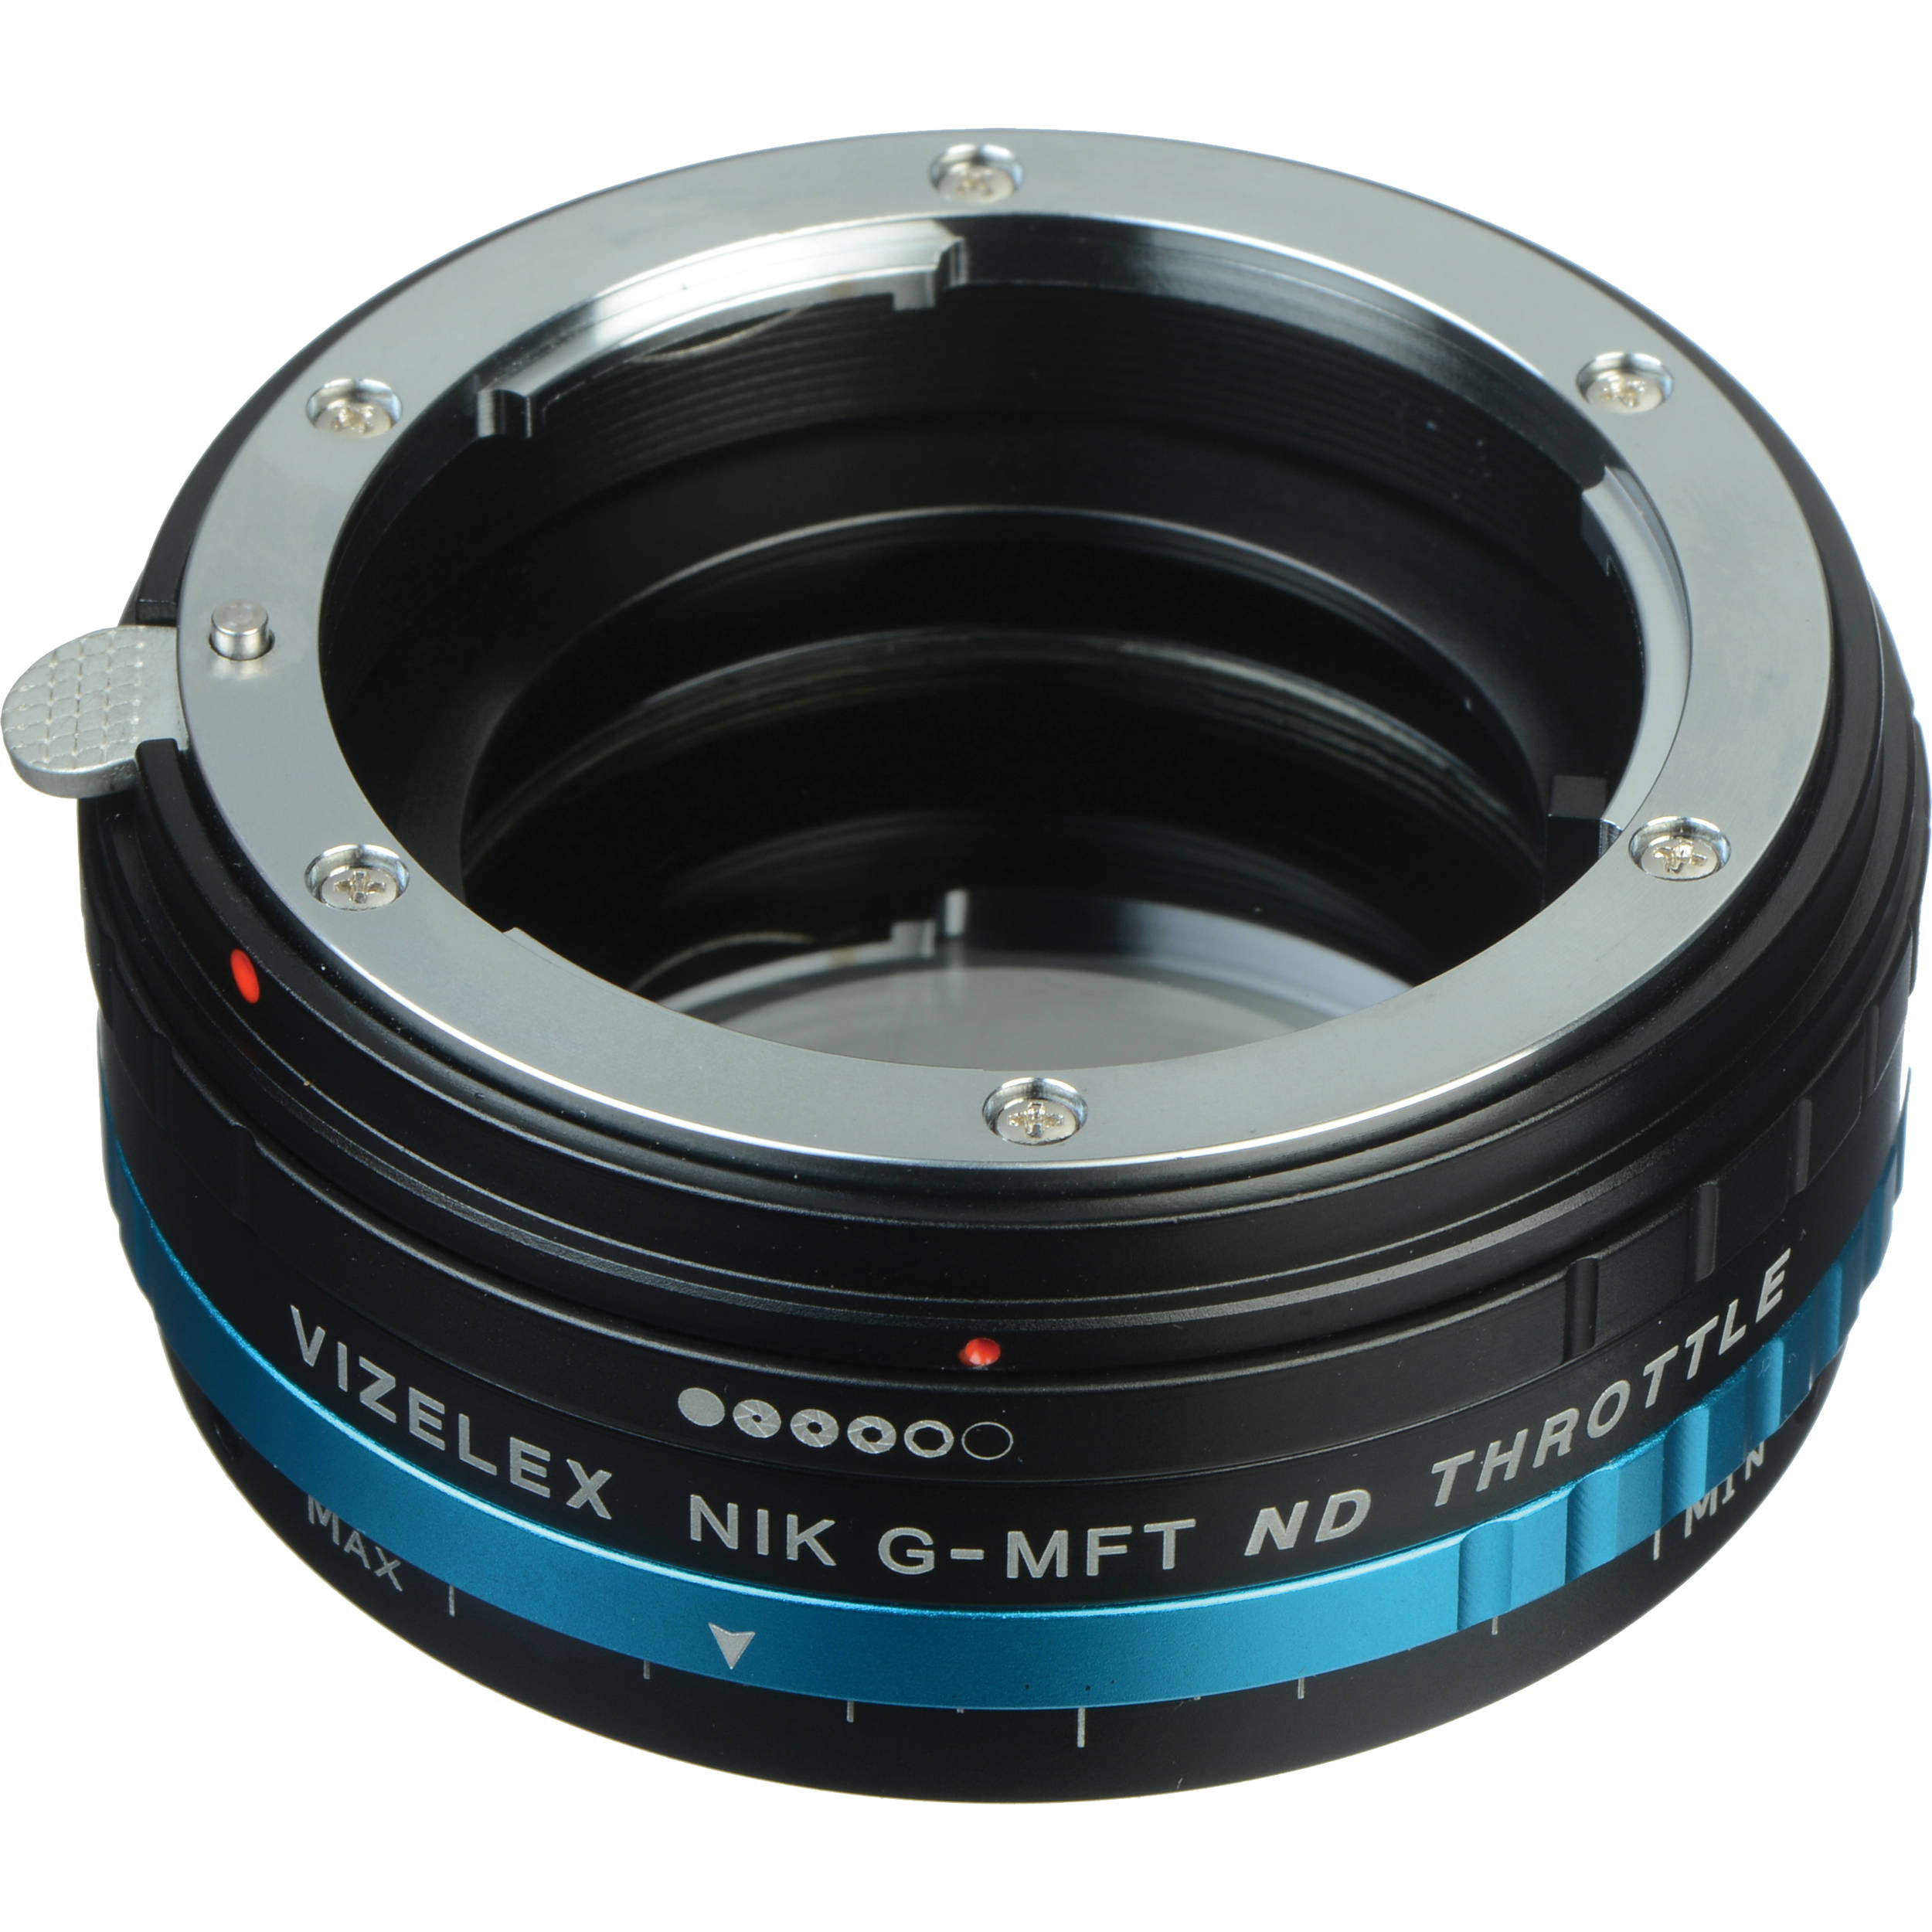 Vizelex ND Throttle Adapter (Nikon G – MFT) Image